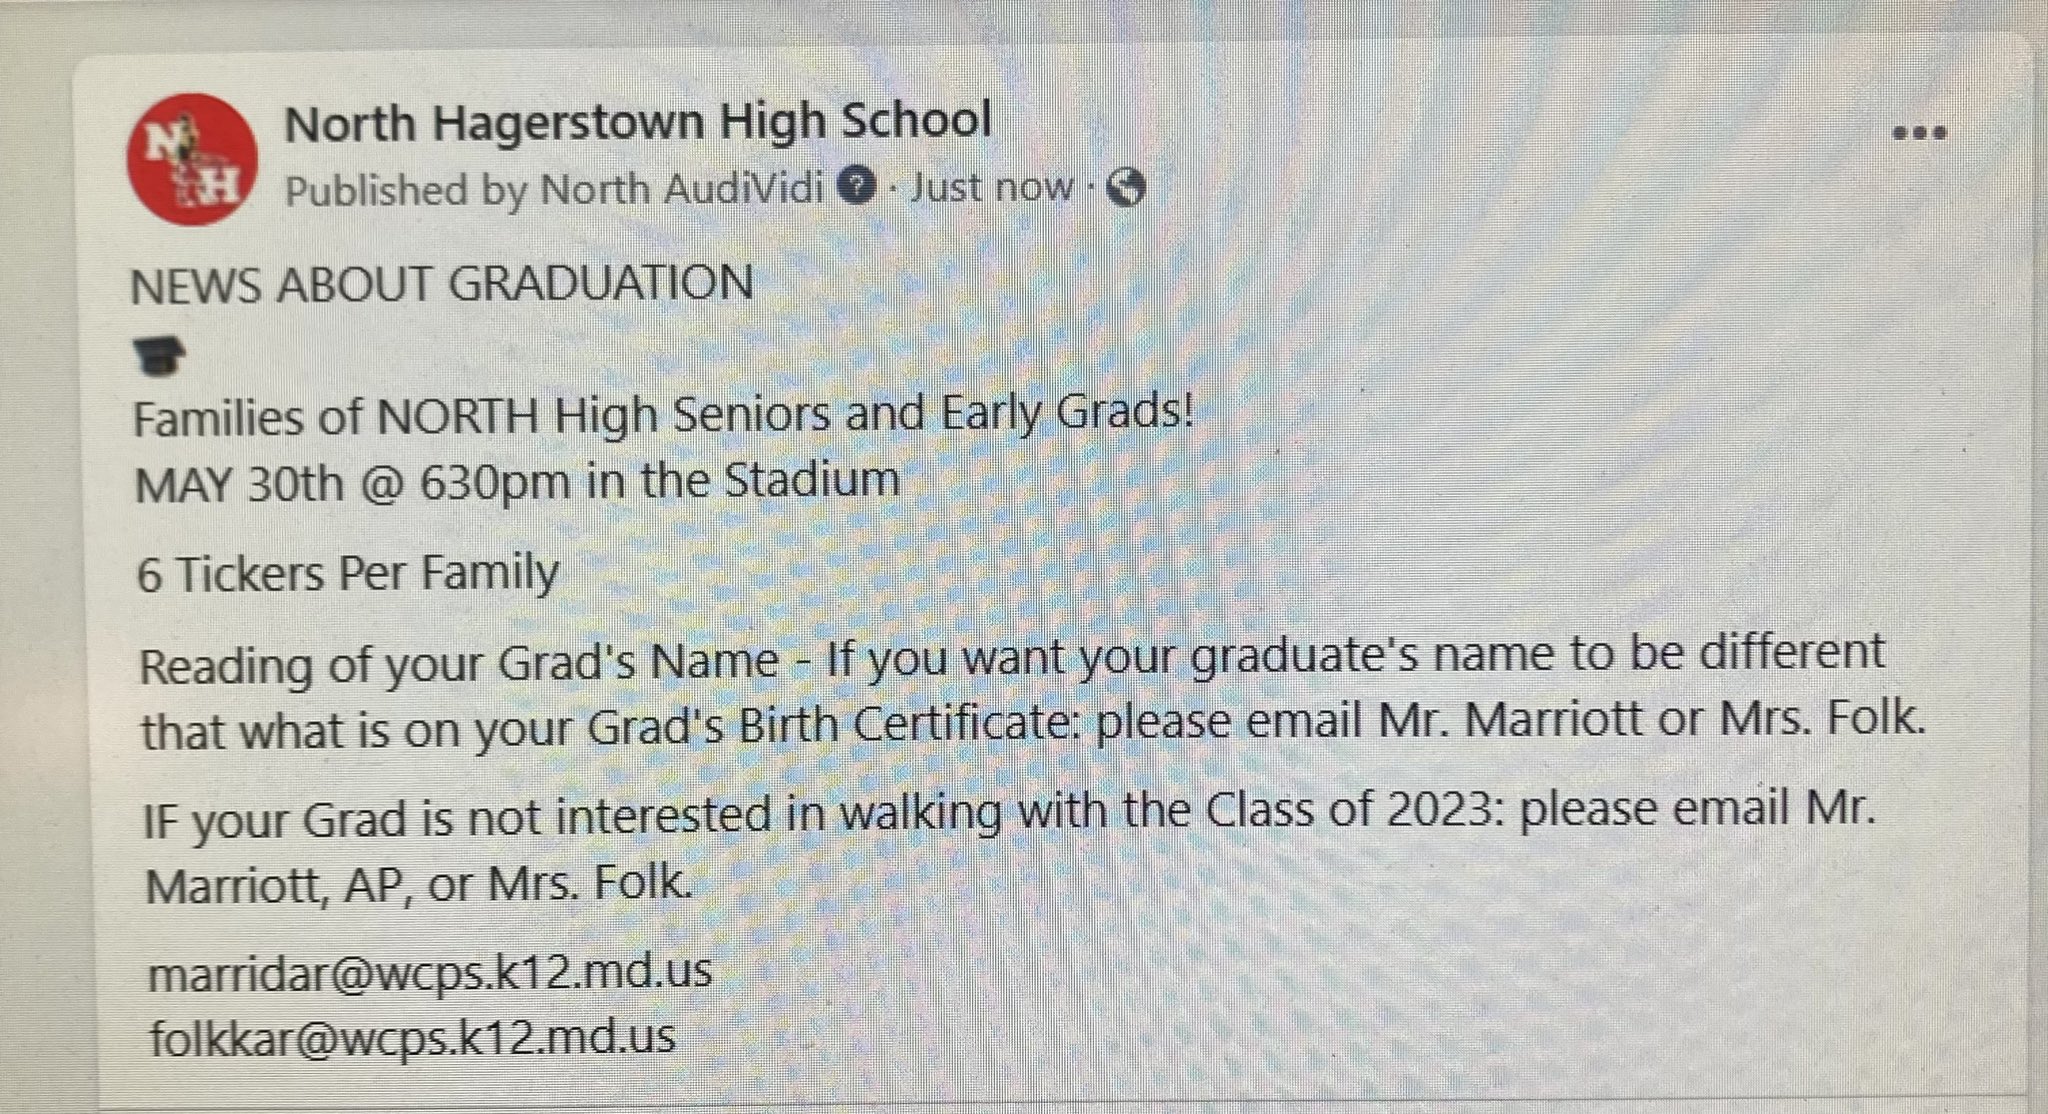 North Hagerstown High School on Twitter "NHHS Graduation Info https